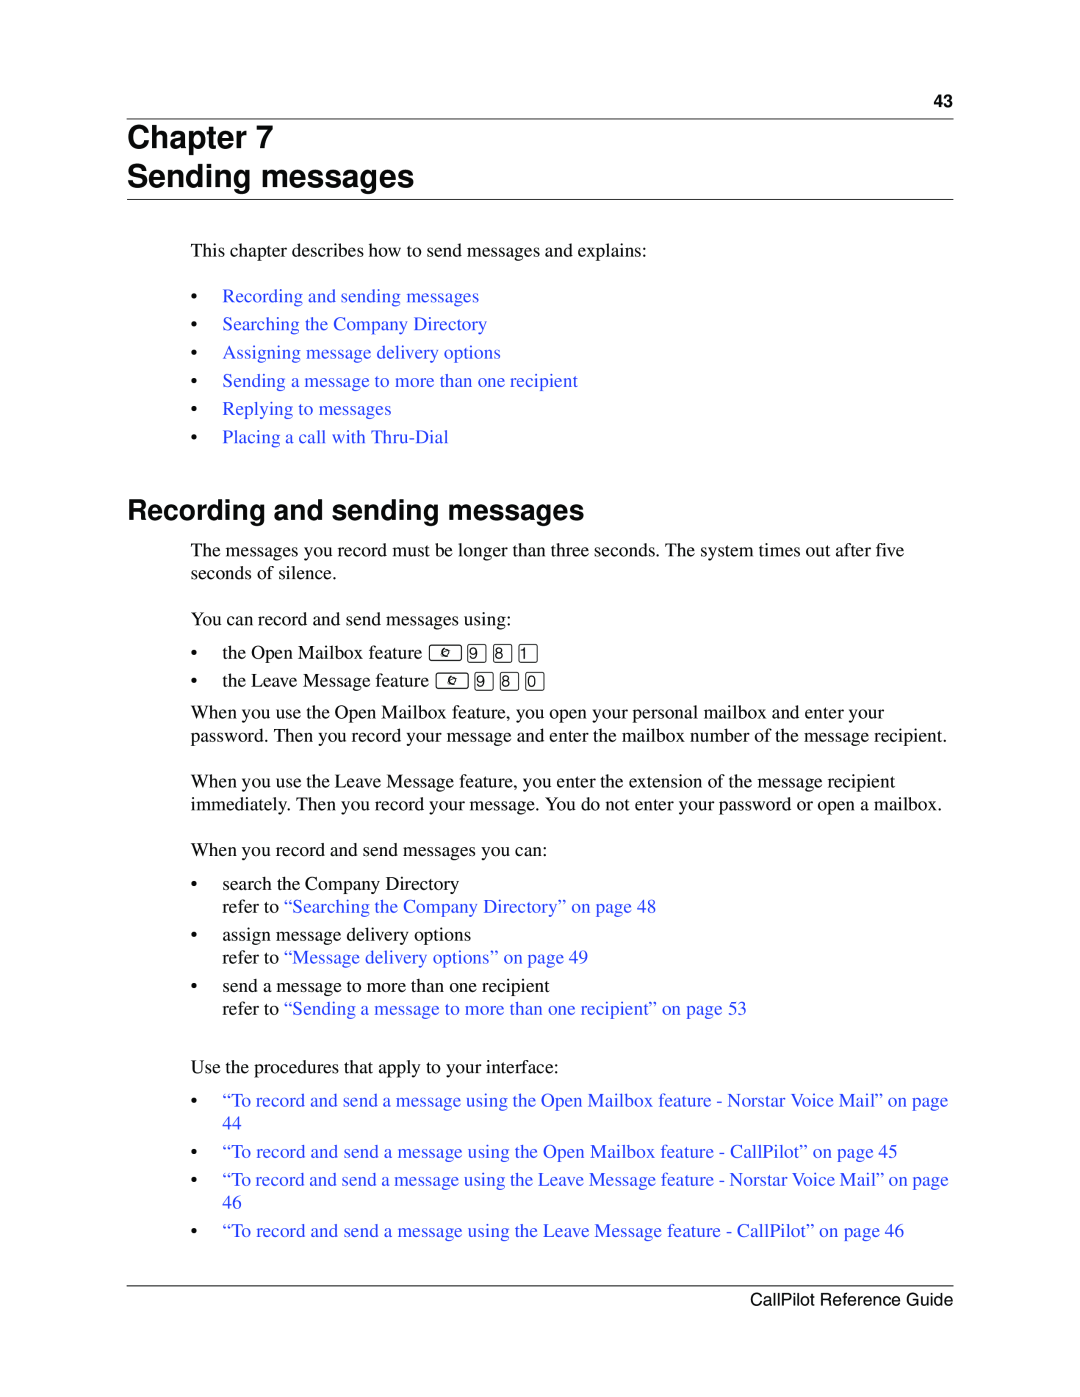 Nortel Networks CallPilot Chapter Sending messages, Recording and sending messages, Assigning message delivery options 